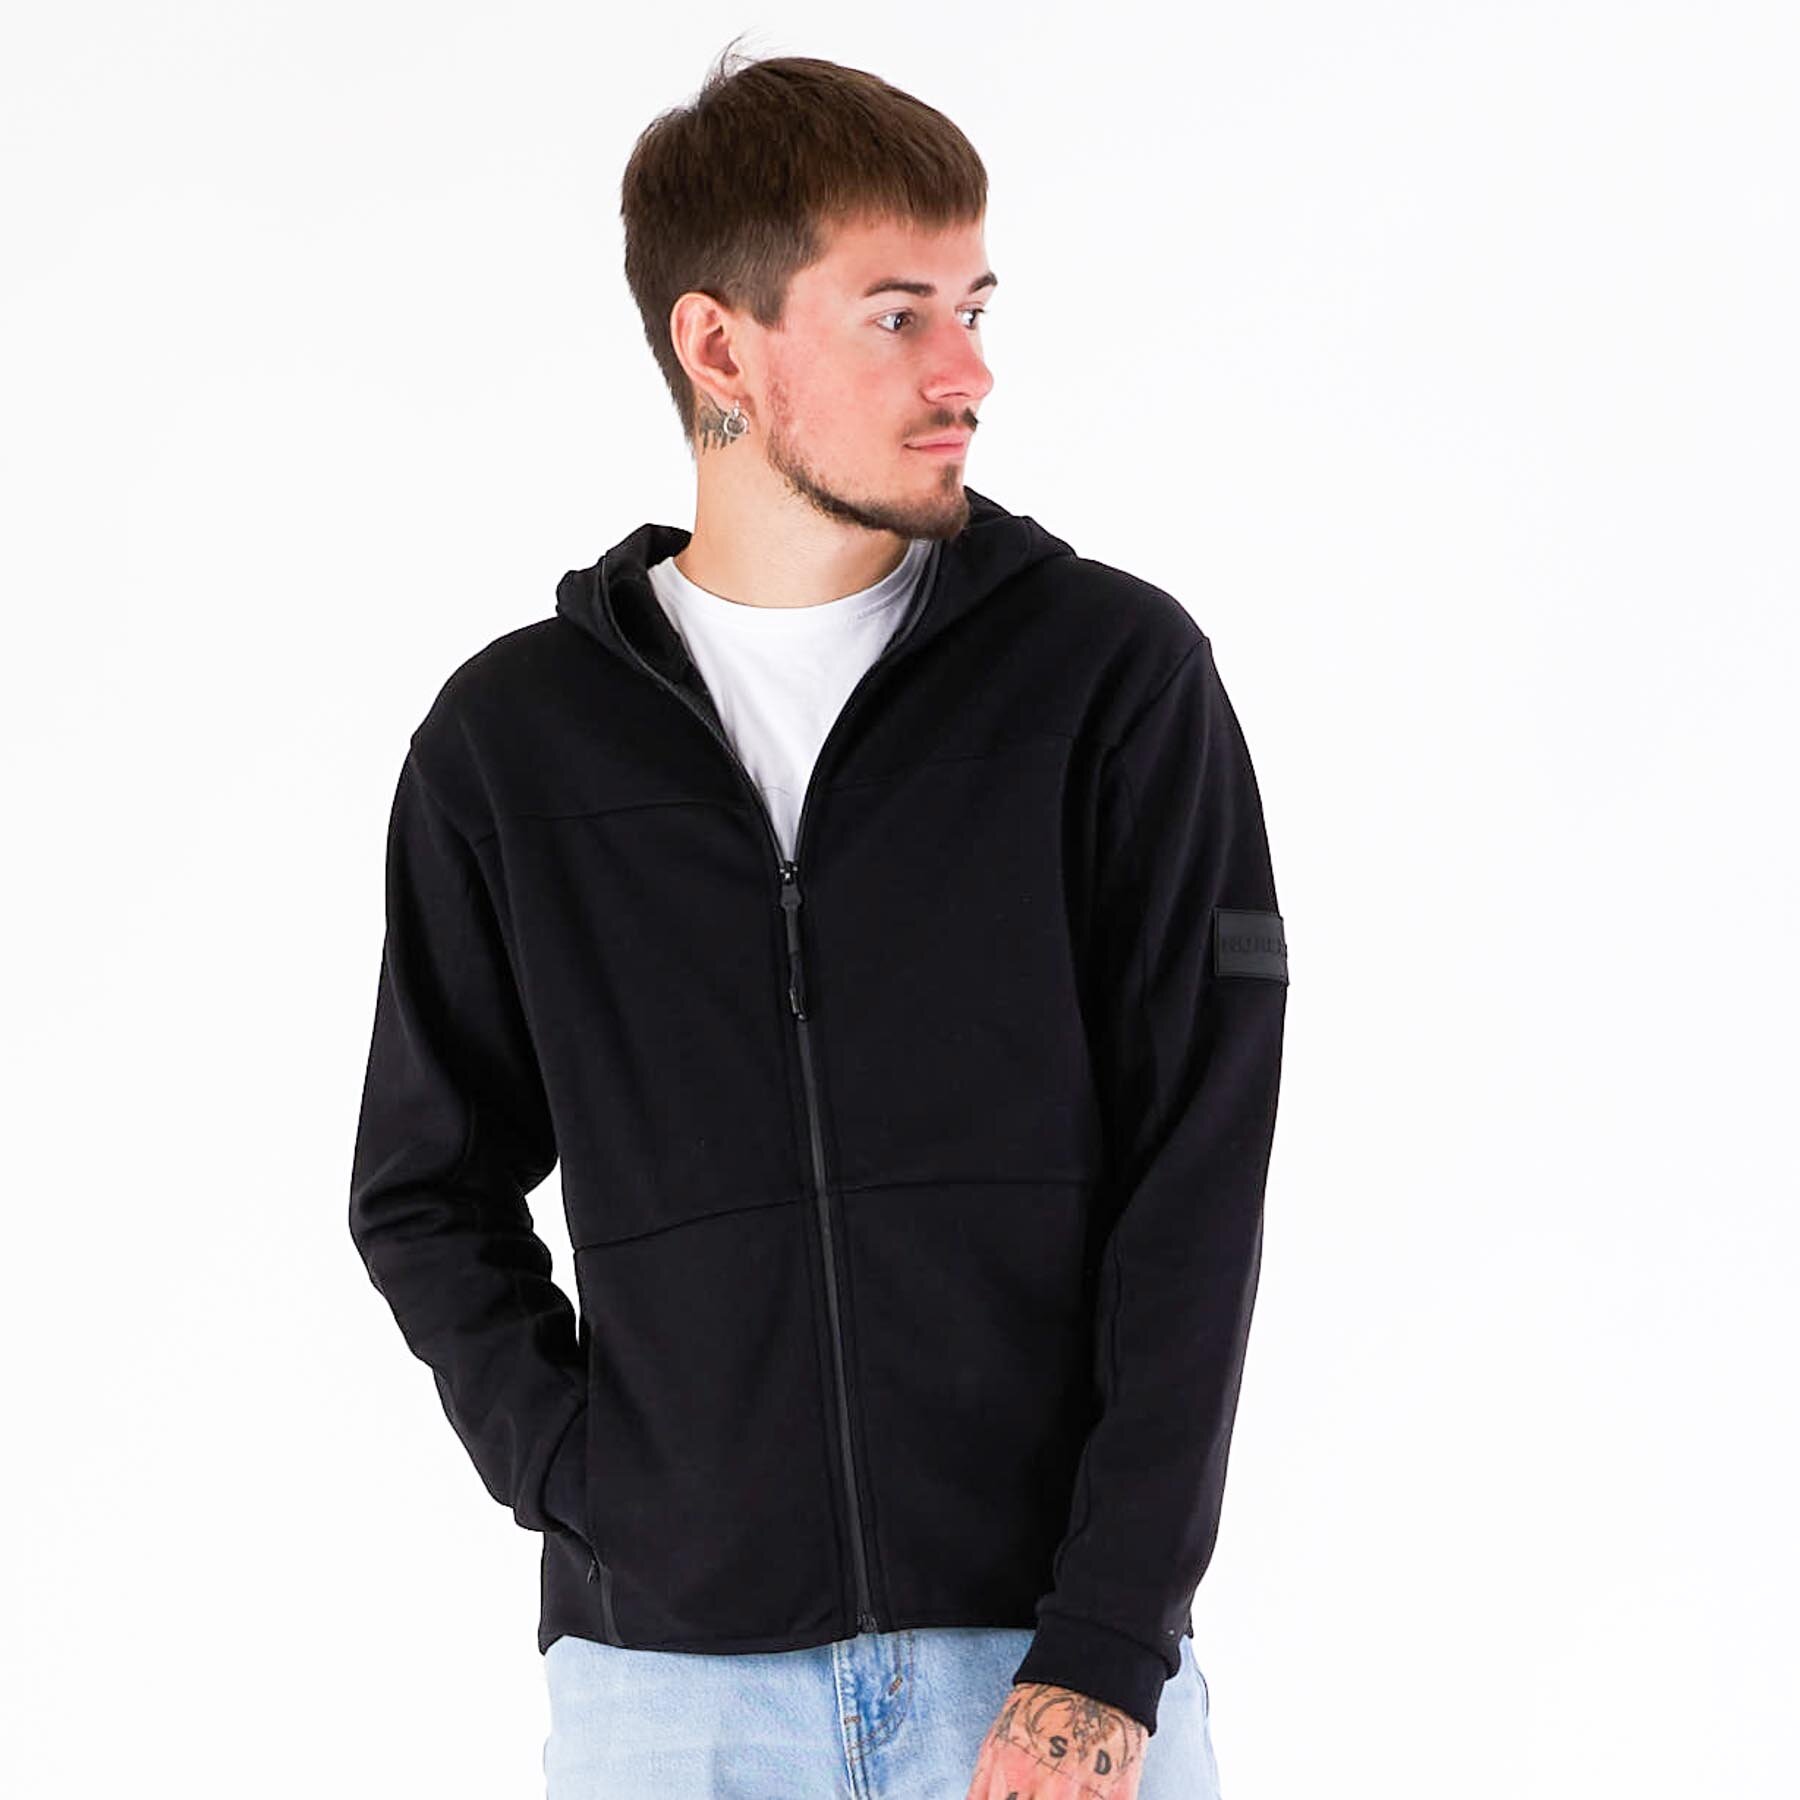 Noreligion - Tech zip hoodie - Sweatshirts og trøjer til herre - Sort - M